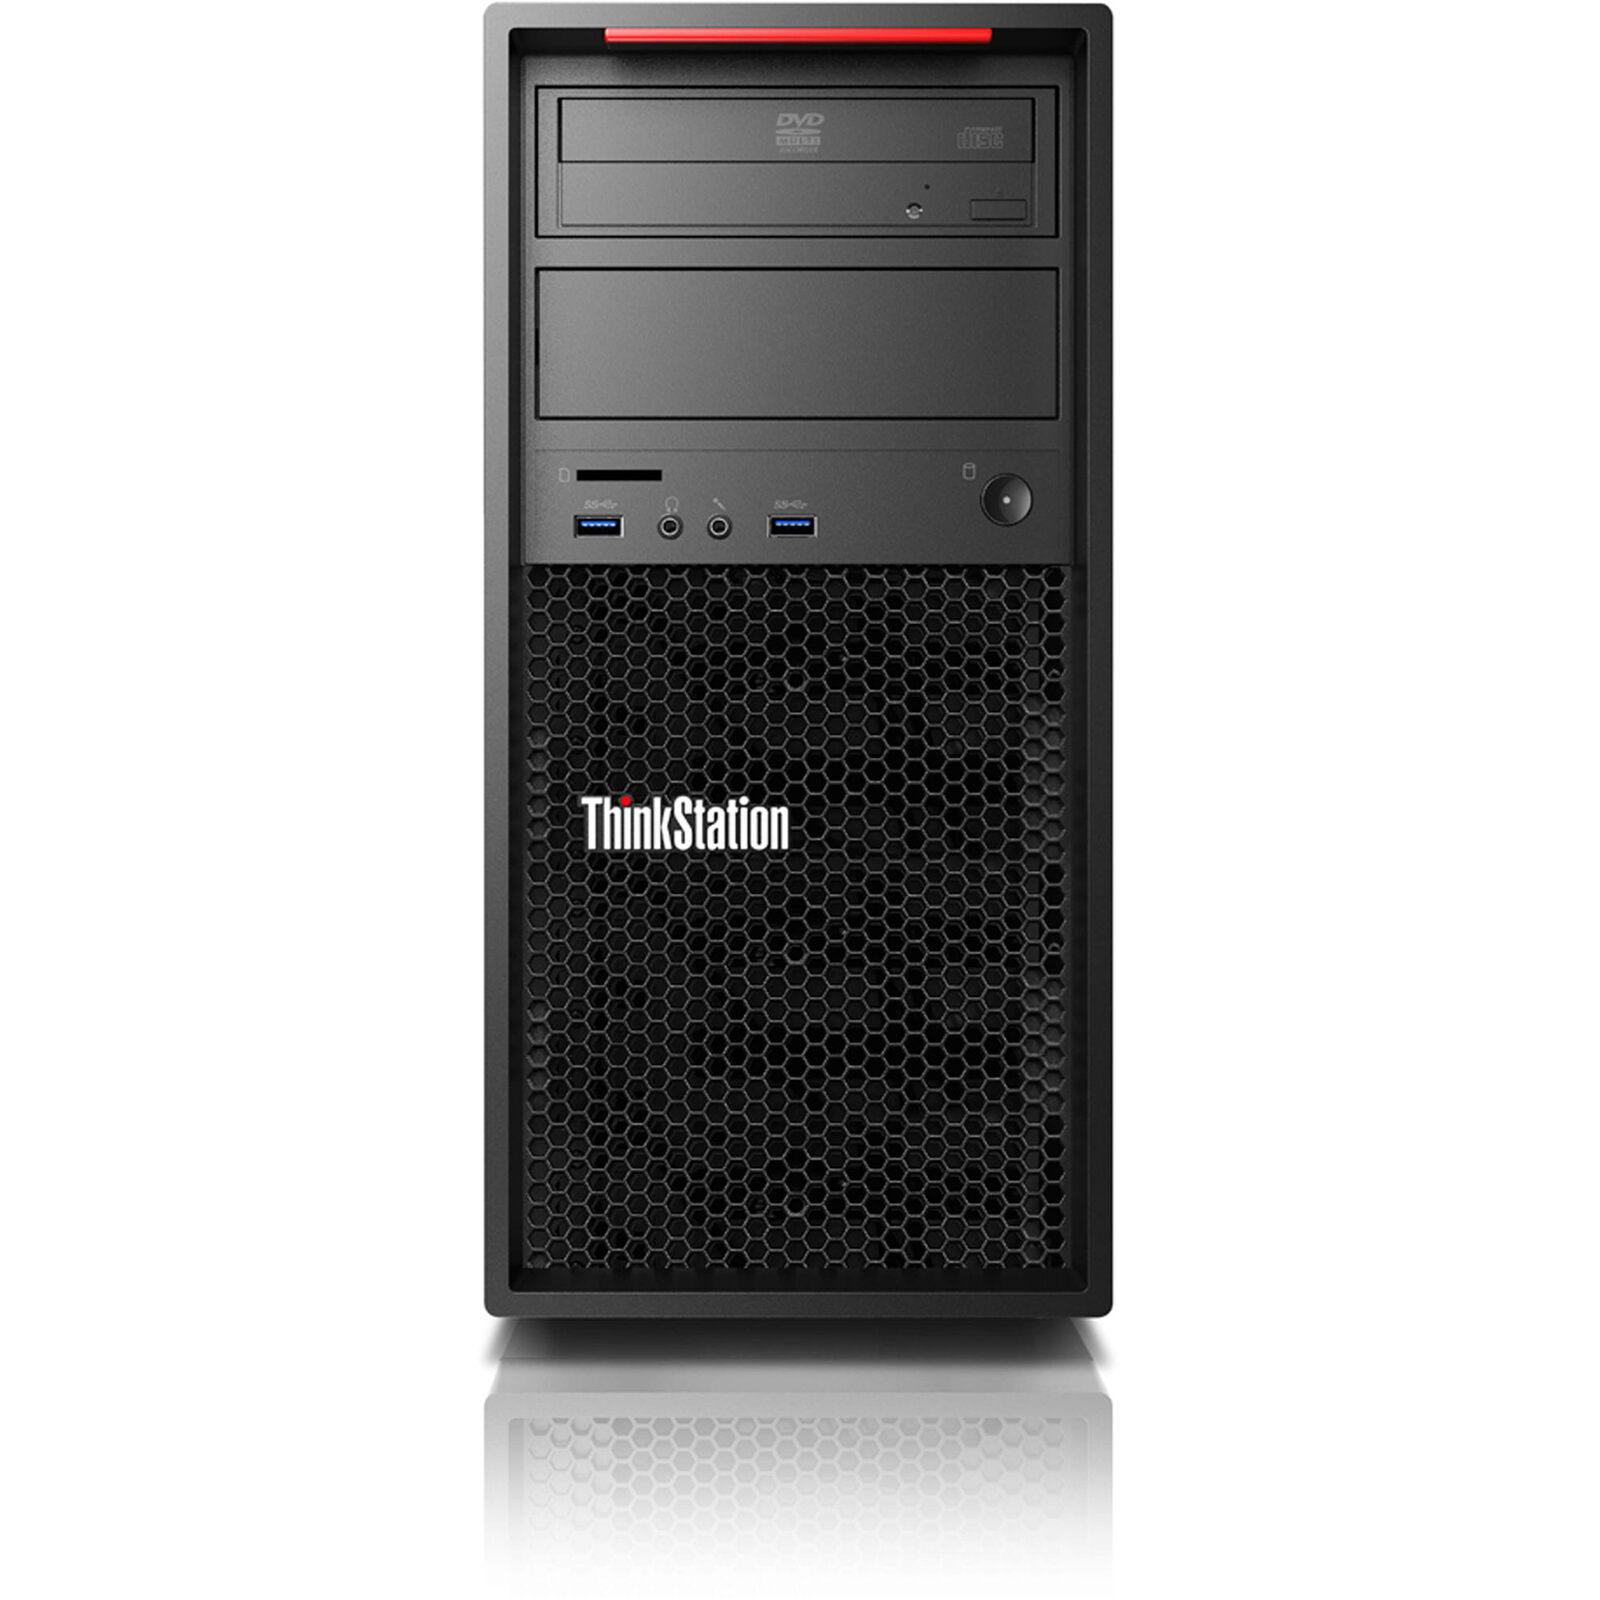 Lenovo ThinkStation P320 Tower Intel i7 6700 3.40GHz 8GB RAM 256GB SSD Win 10 Full Size Image